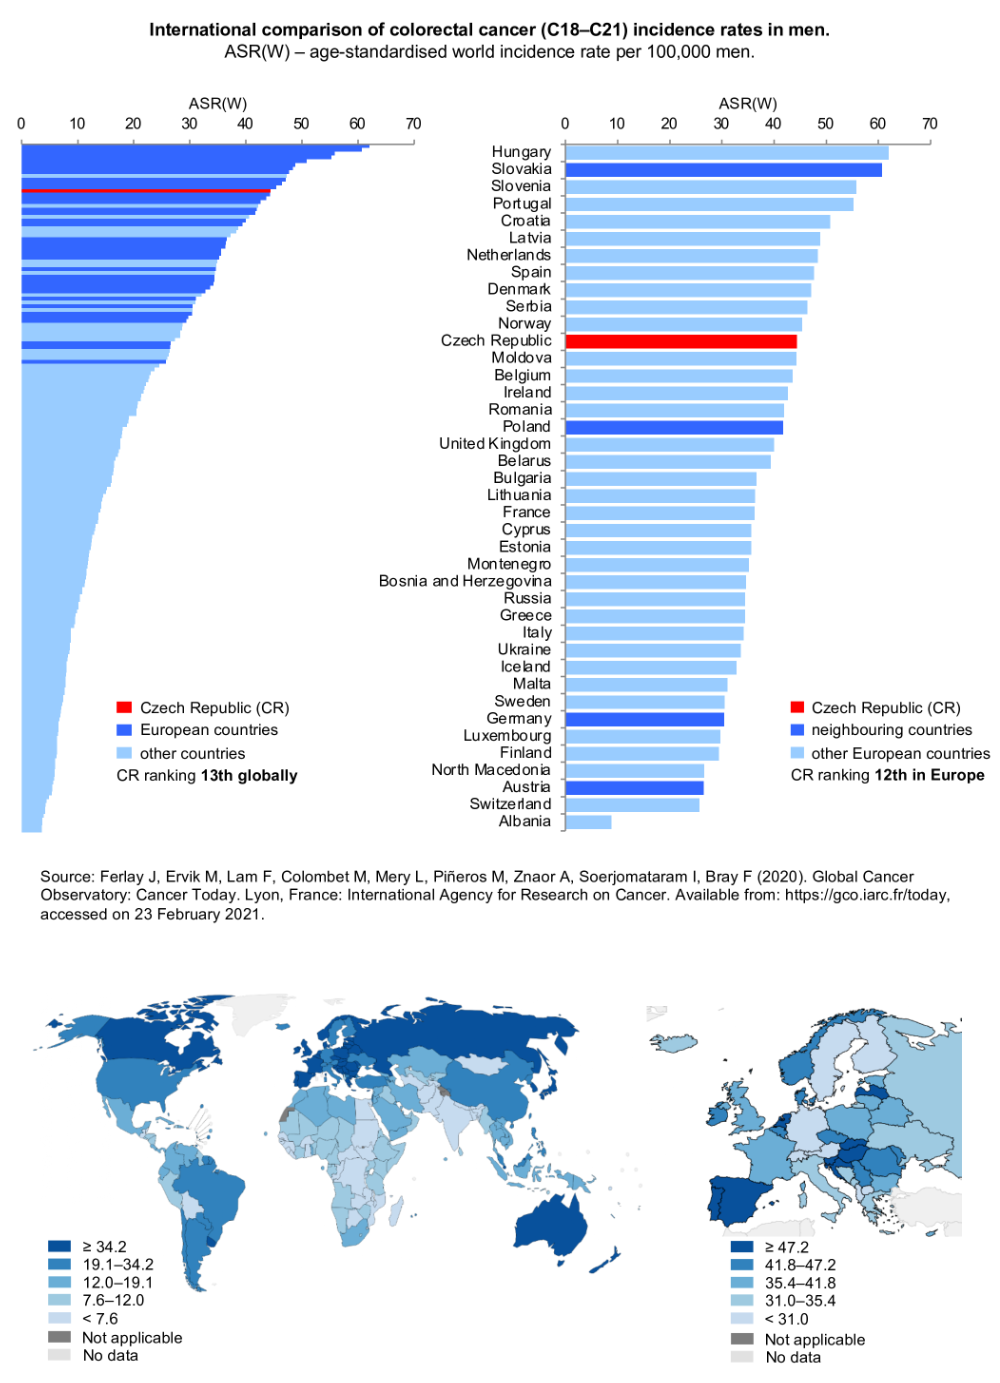 Figure 1b: International comparison of colorectal cancer incidence rates – men. ASR(W) – age-standardized world incidence rate per 100,000 population. Source: GLOBOCAN 2020